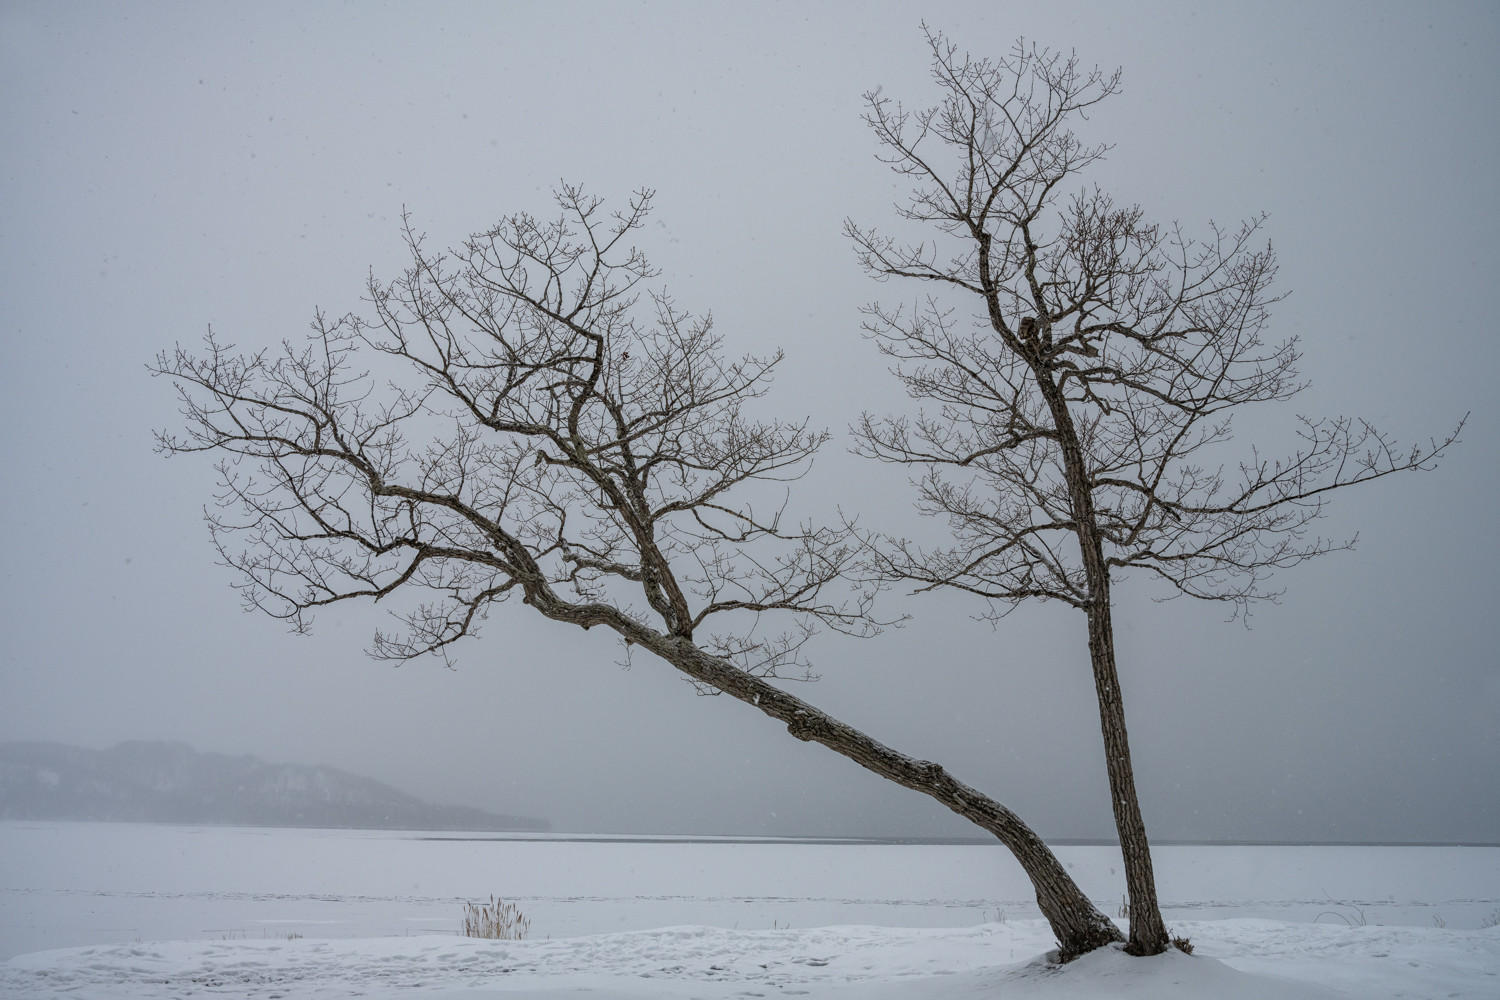 Man in Tree : Japan, Hokkaido, Silent Snow : ELIZABETH SANJUAN PHOTOGRAPHY